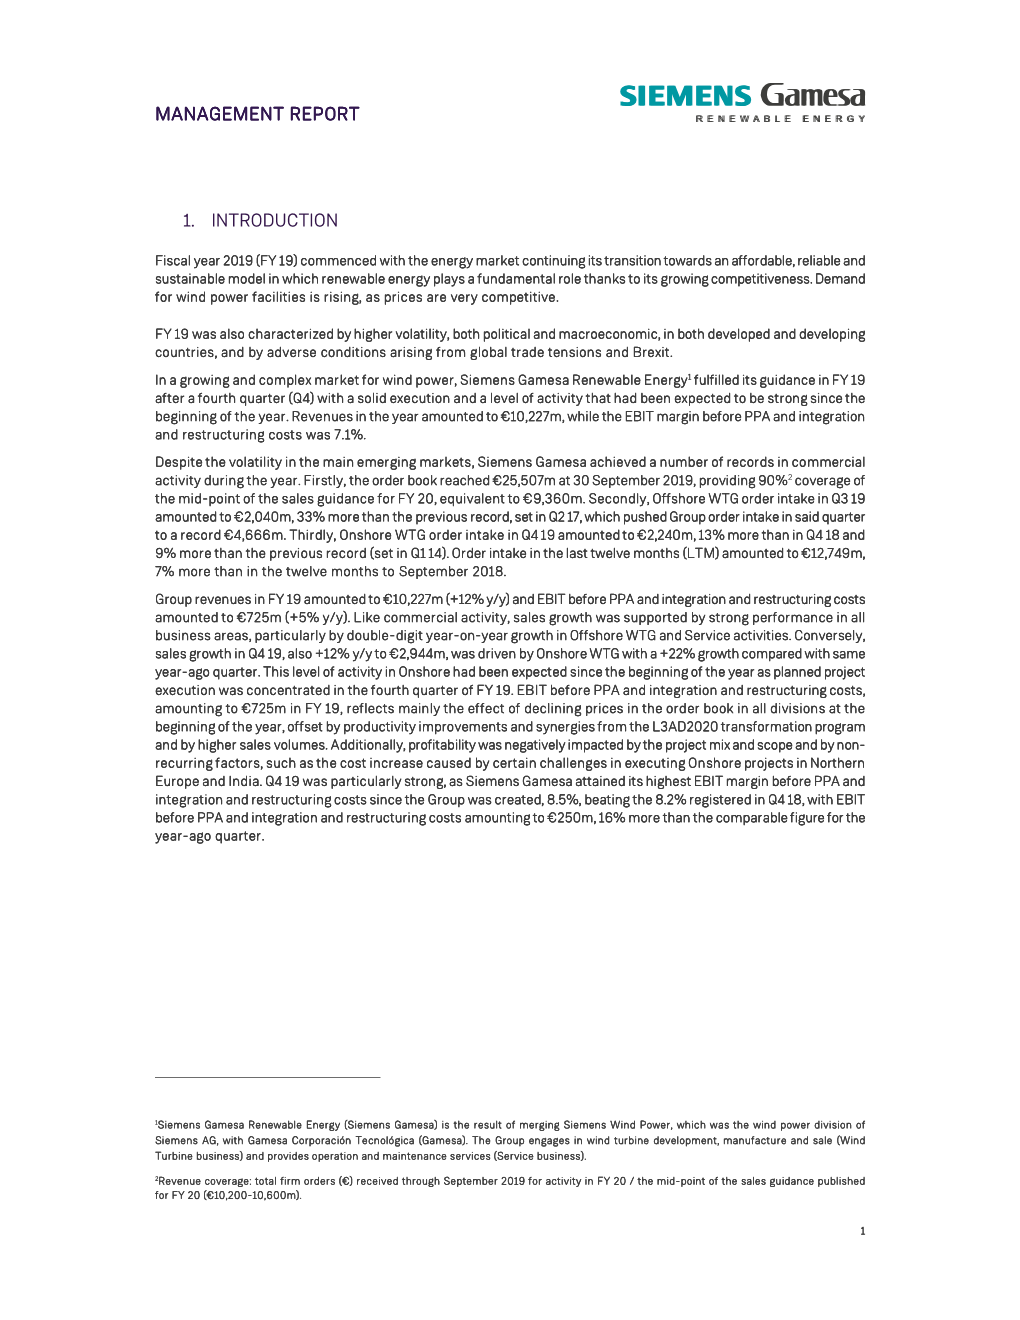 Individual Management Report of Siemens